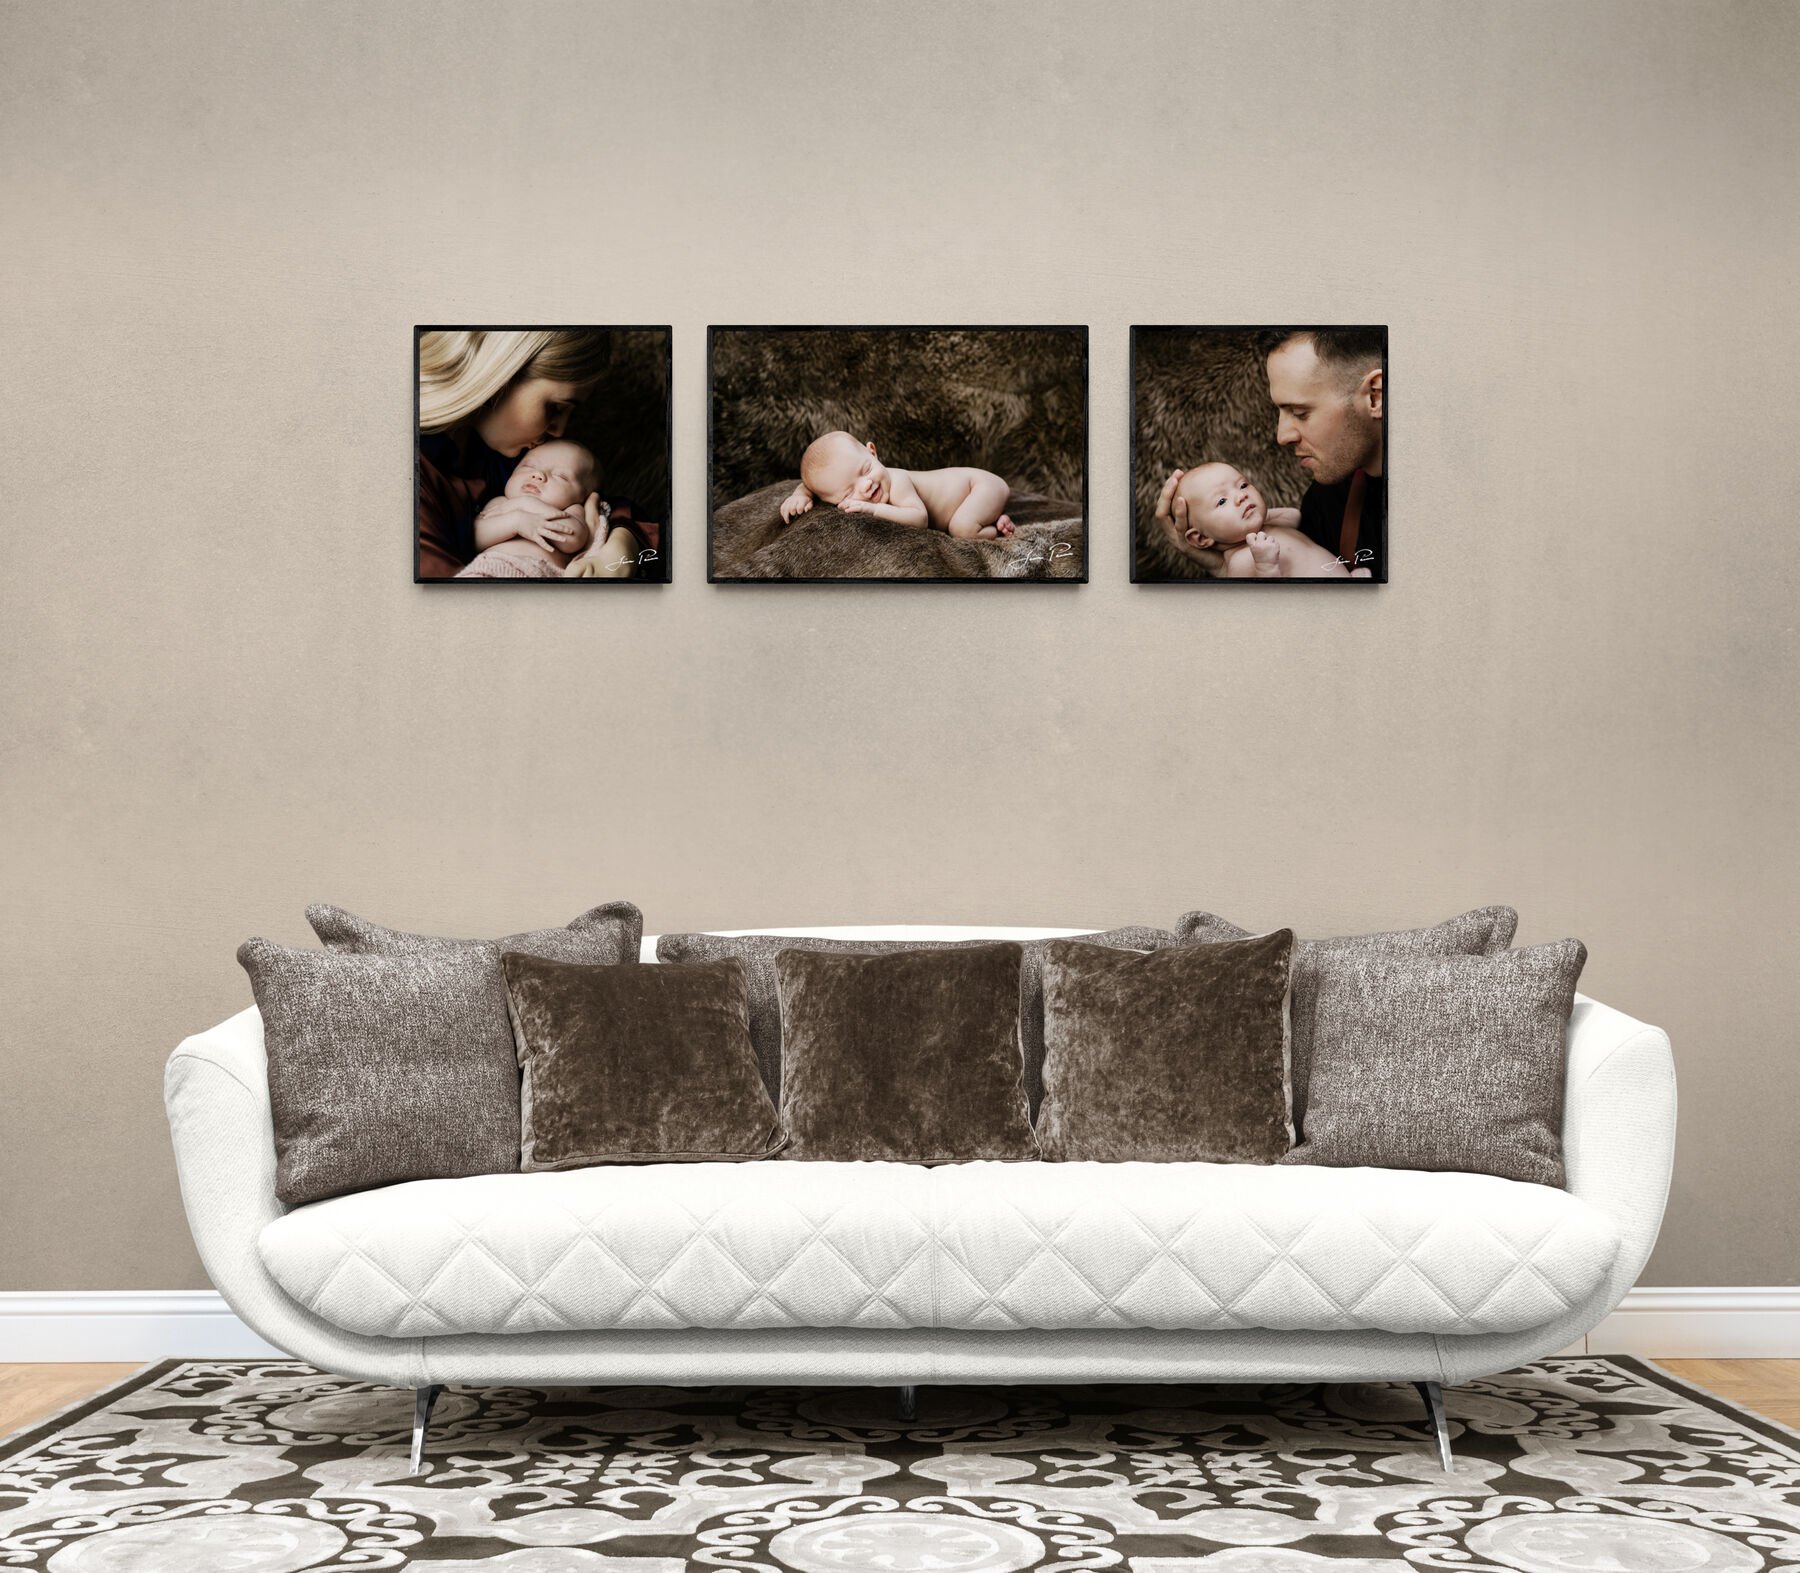 Comfy_modern_sofa_in_living_room-2.jpg